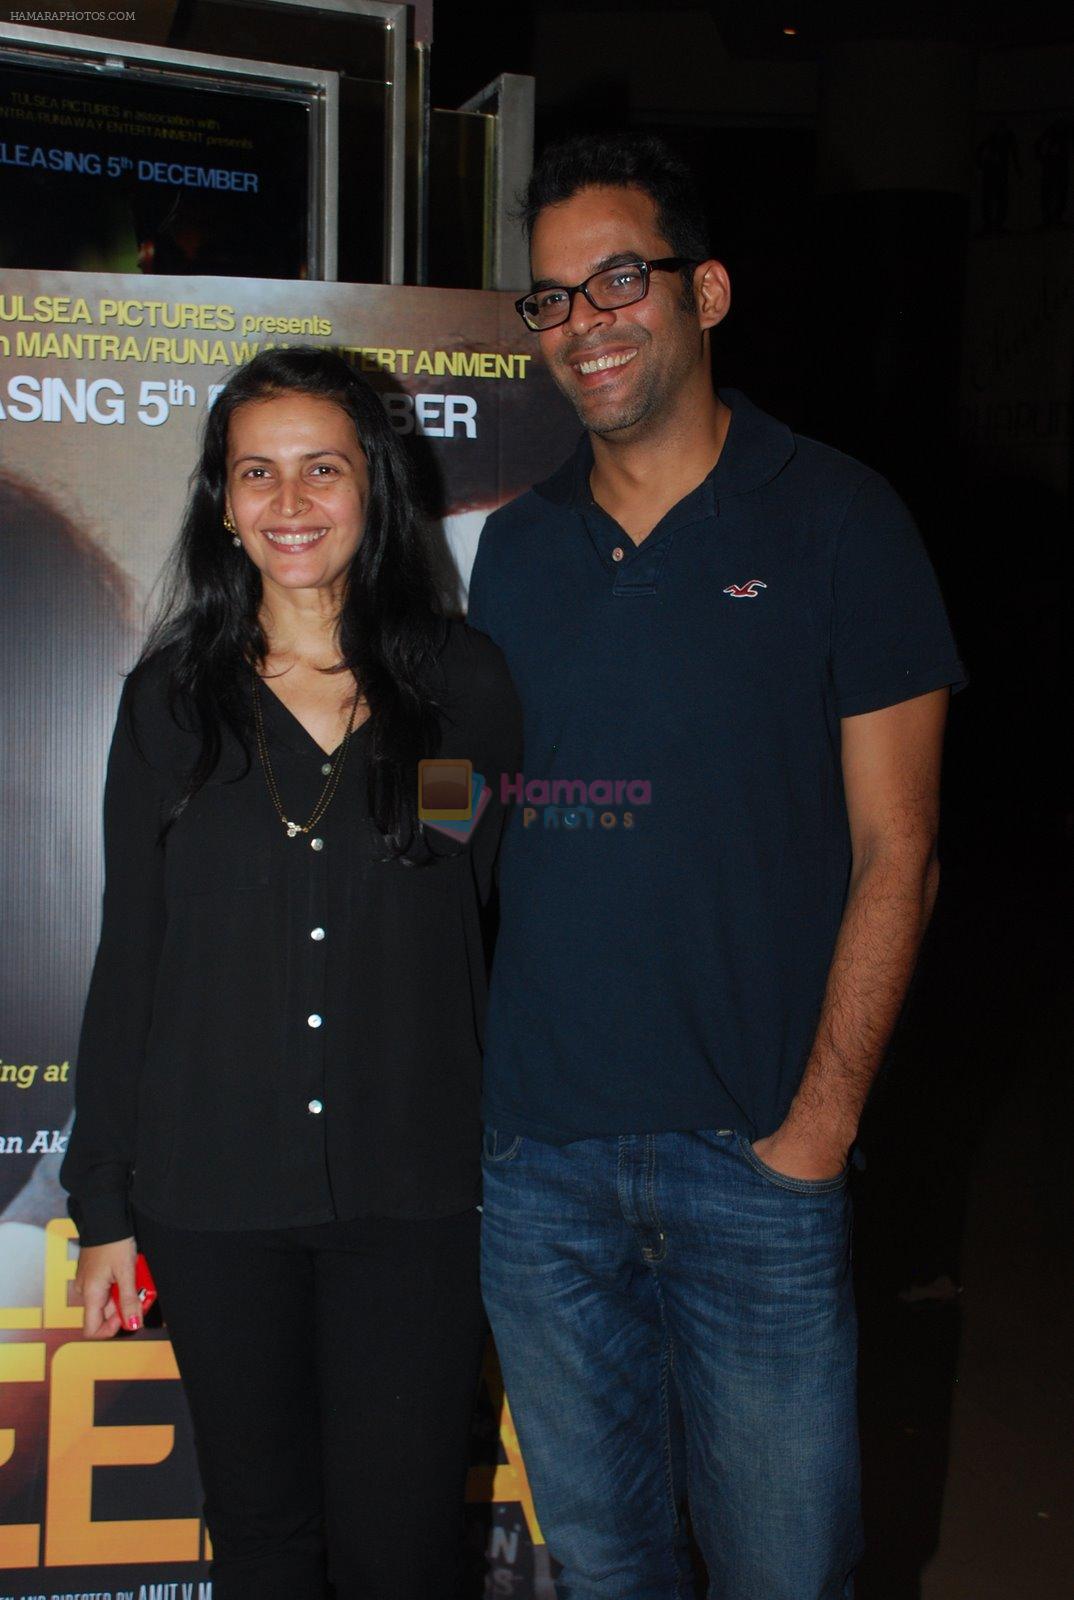 at Sulemani Keeda film screening in PVR, Mumbai on 2nd Dec 2014